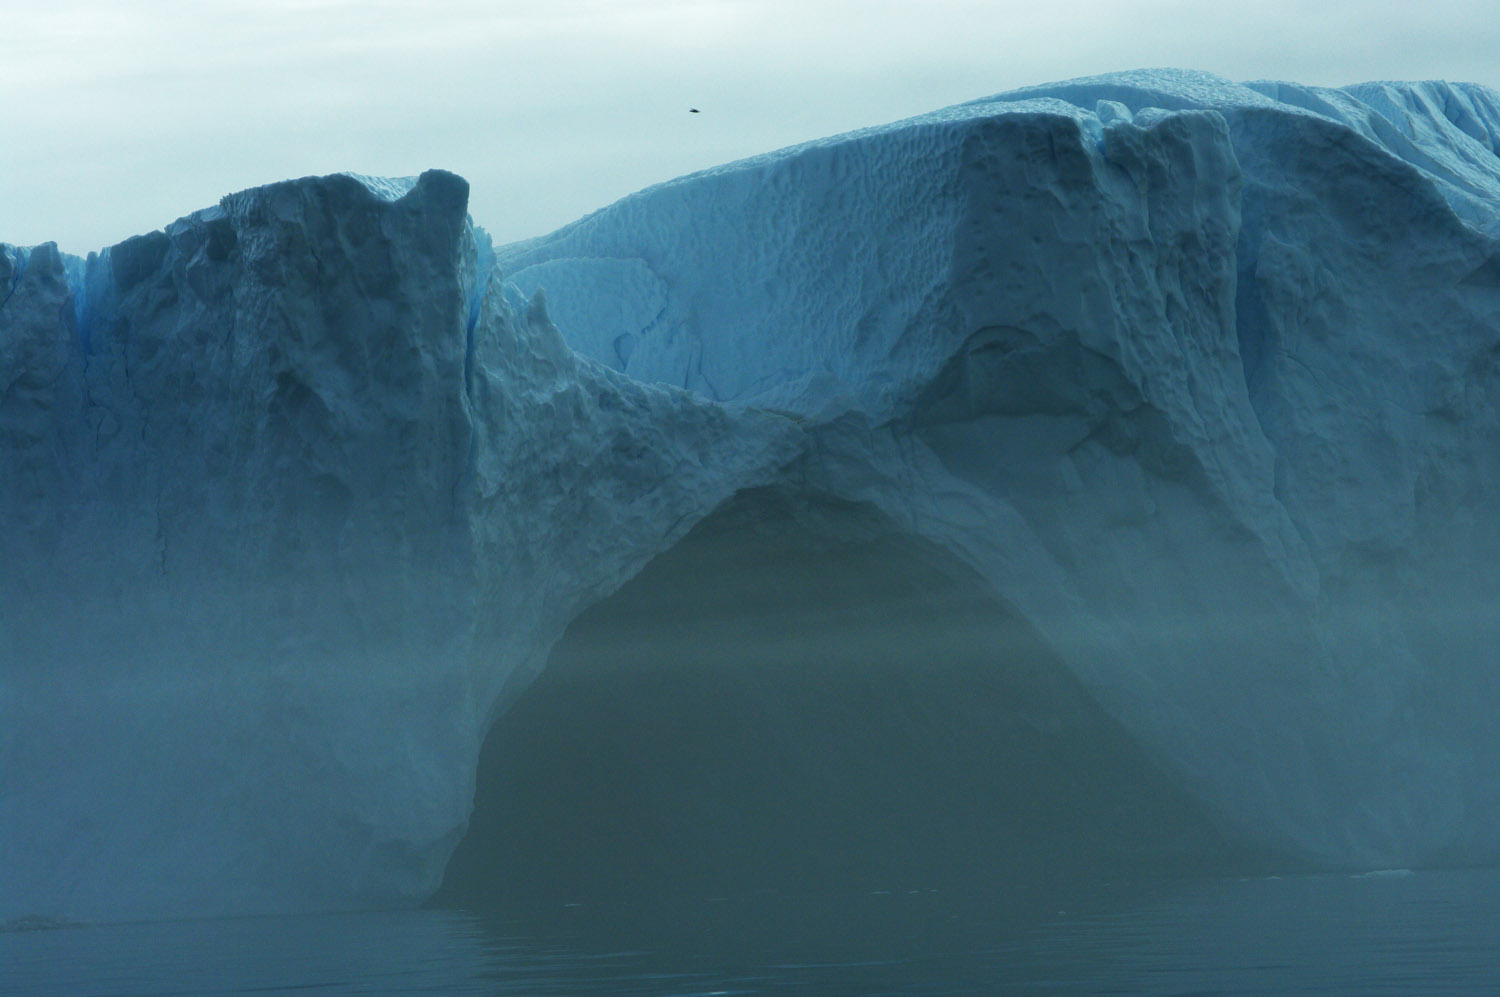 Disko Bay, Ilulissat Greenland, Icebergs in the Mist